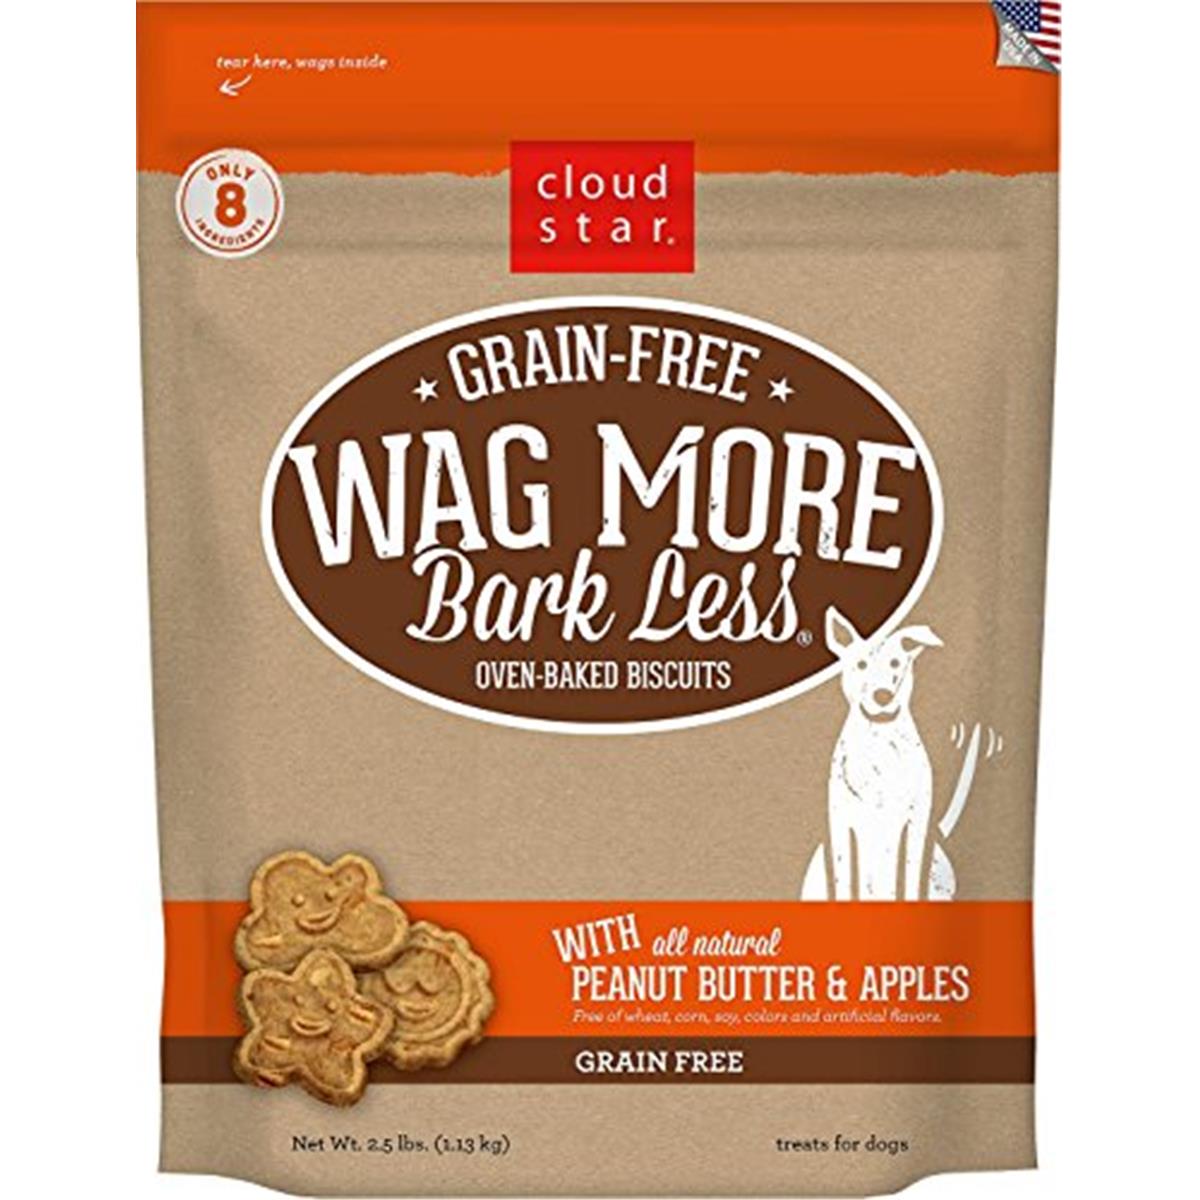 Cw78504 Cloud Star Wag More Bark Less Grain Free Peanut Butter & Apples Flavor Dog Treats